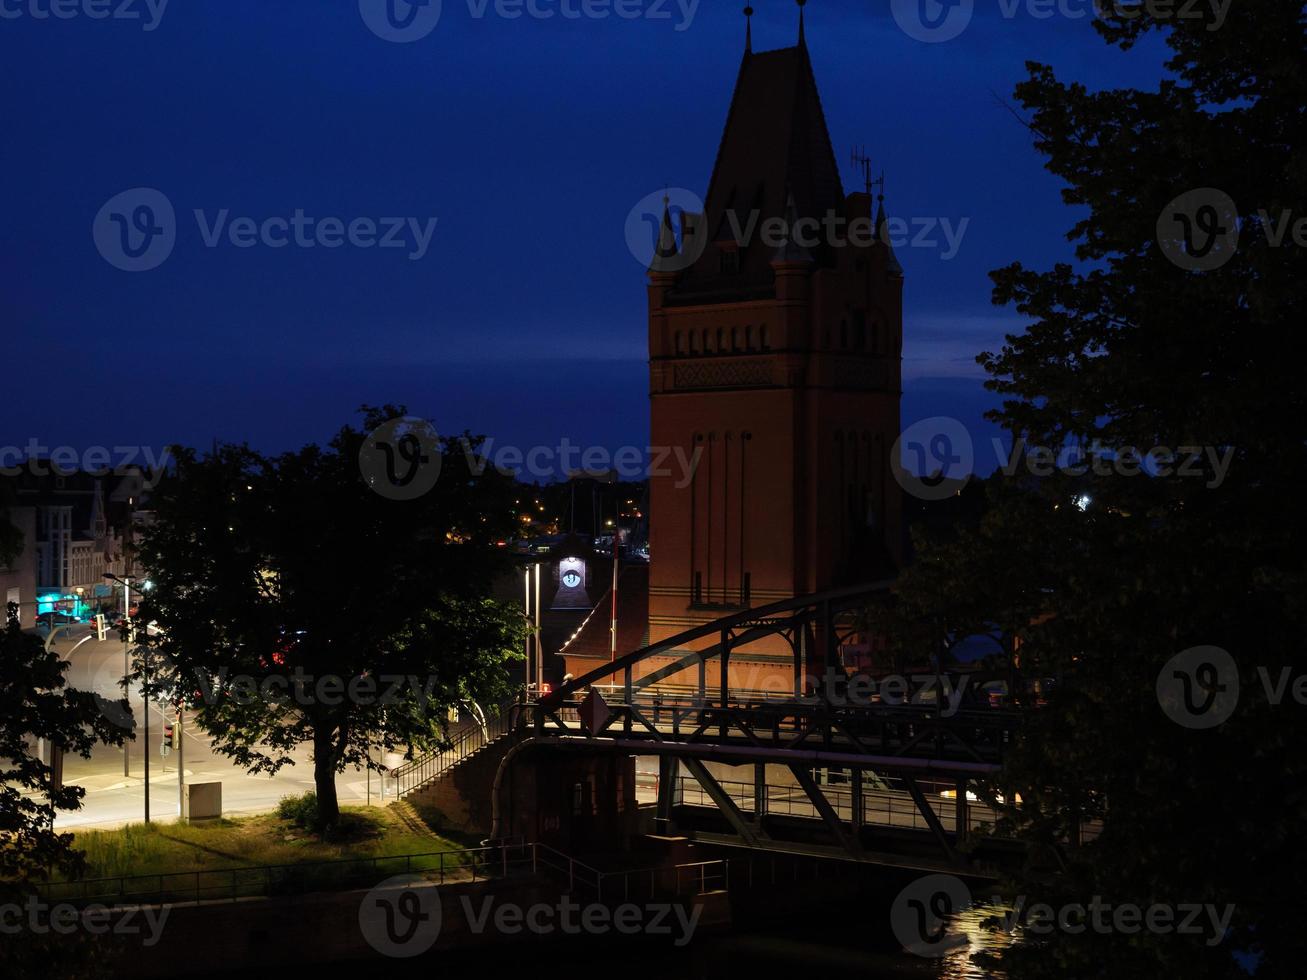 Lübeck stad vid Östersjön foto